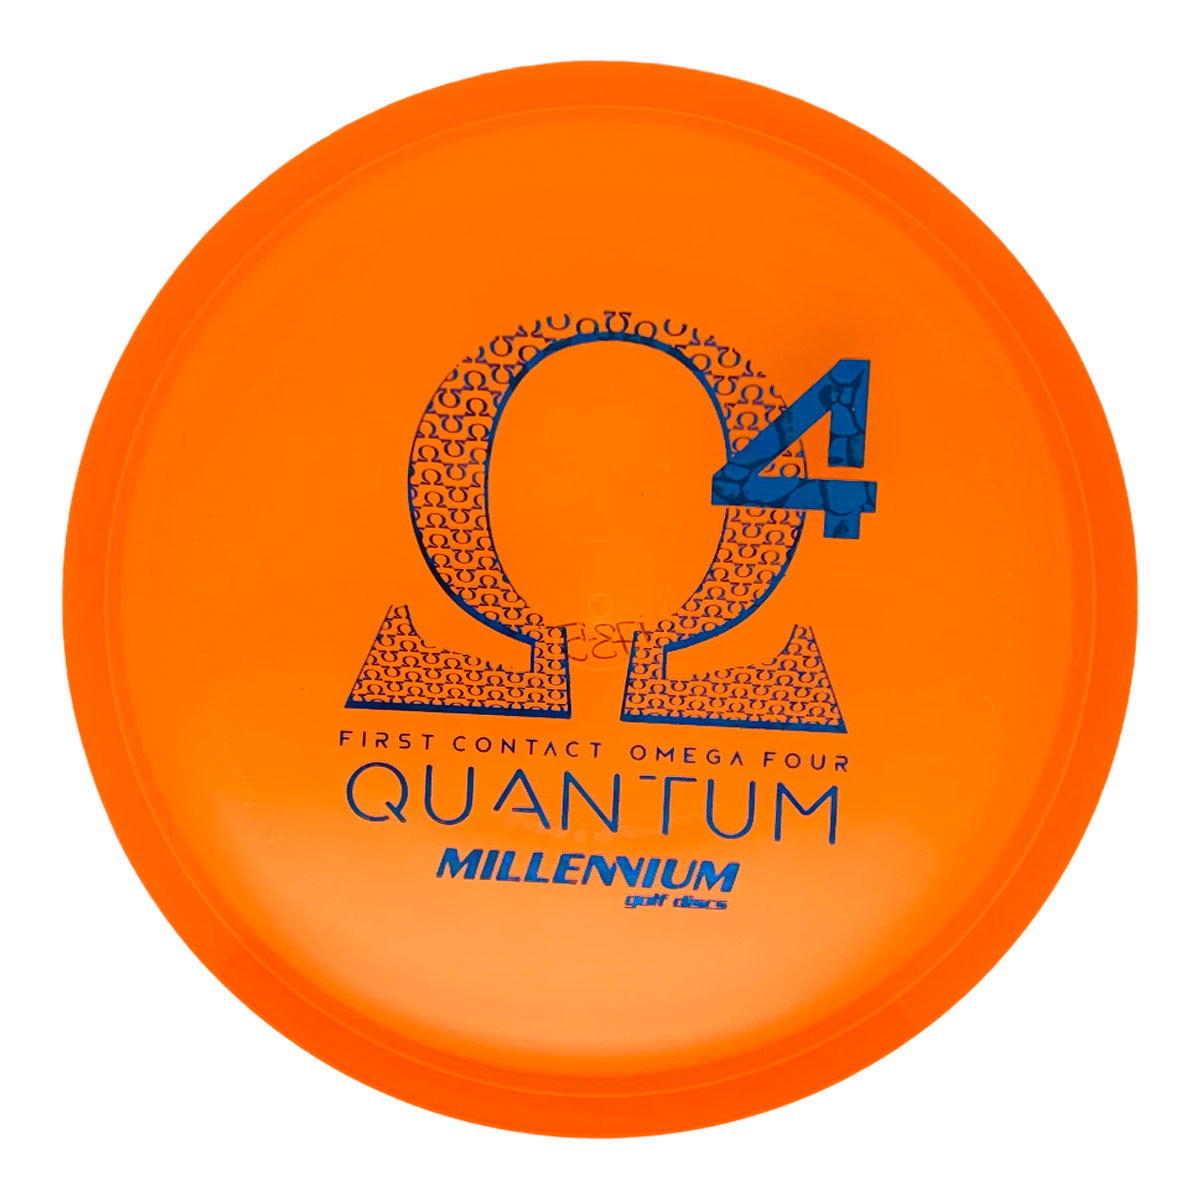 Millennium Quantum Omega 4 - First Contact